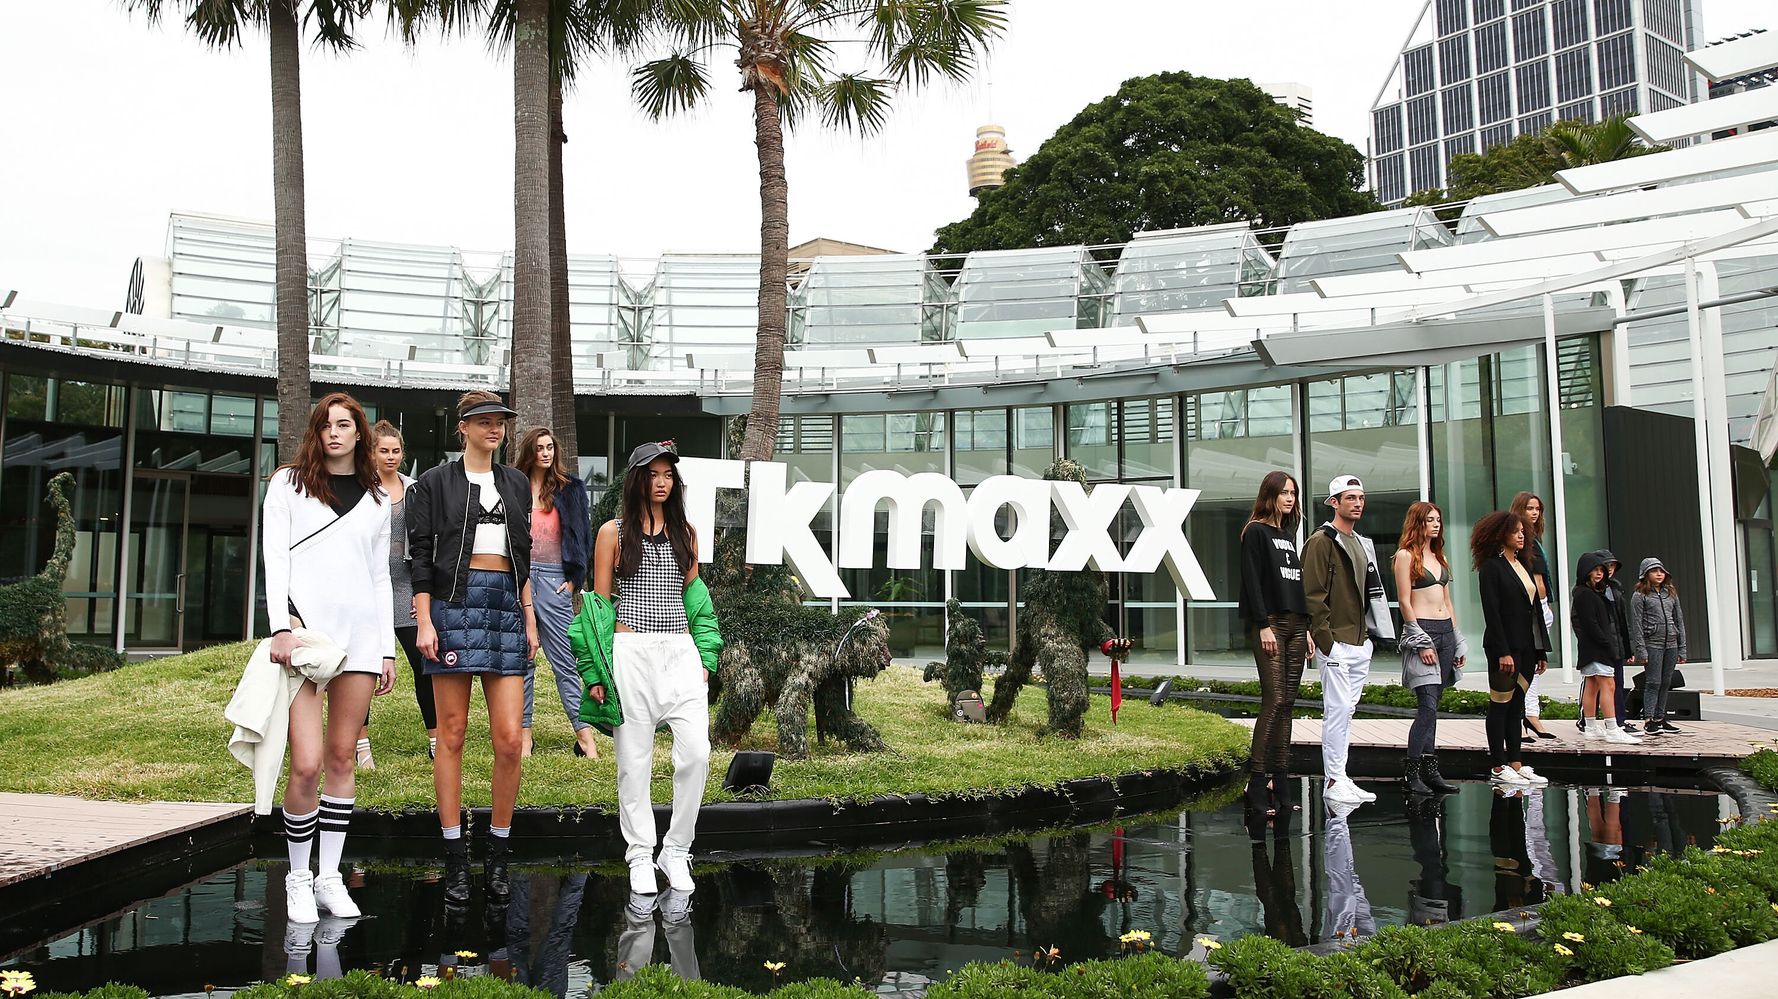 TK Maxx Australia - New Store Openings